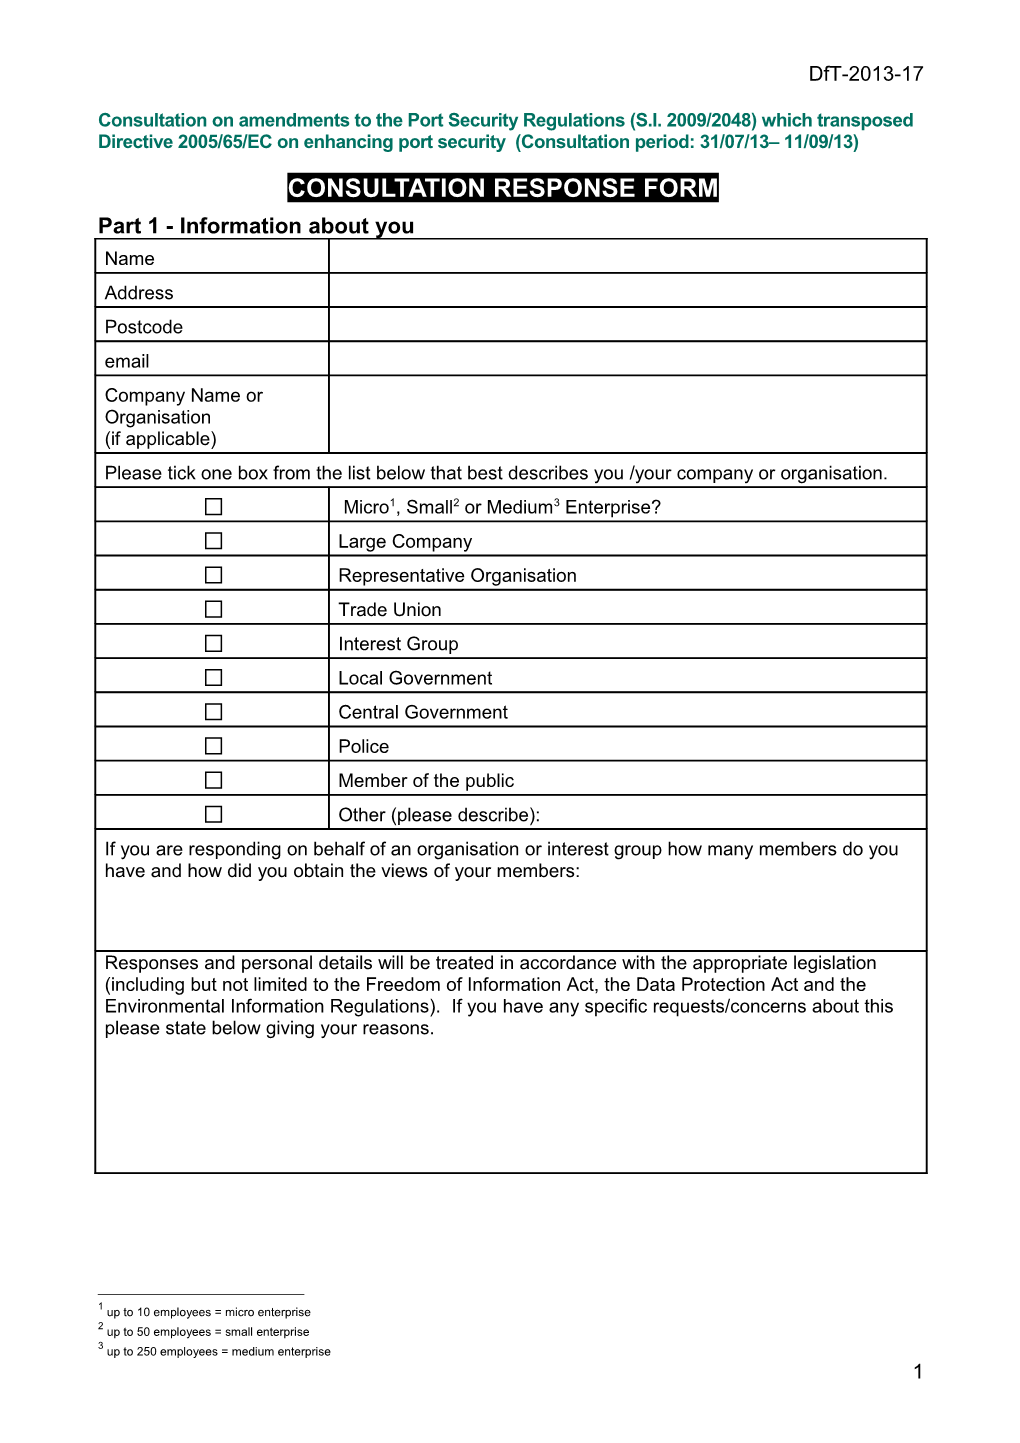 Port Security Regulation 2009 Consultation Response Form